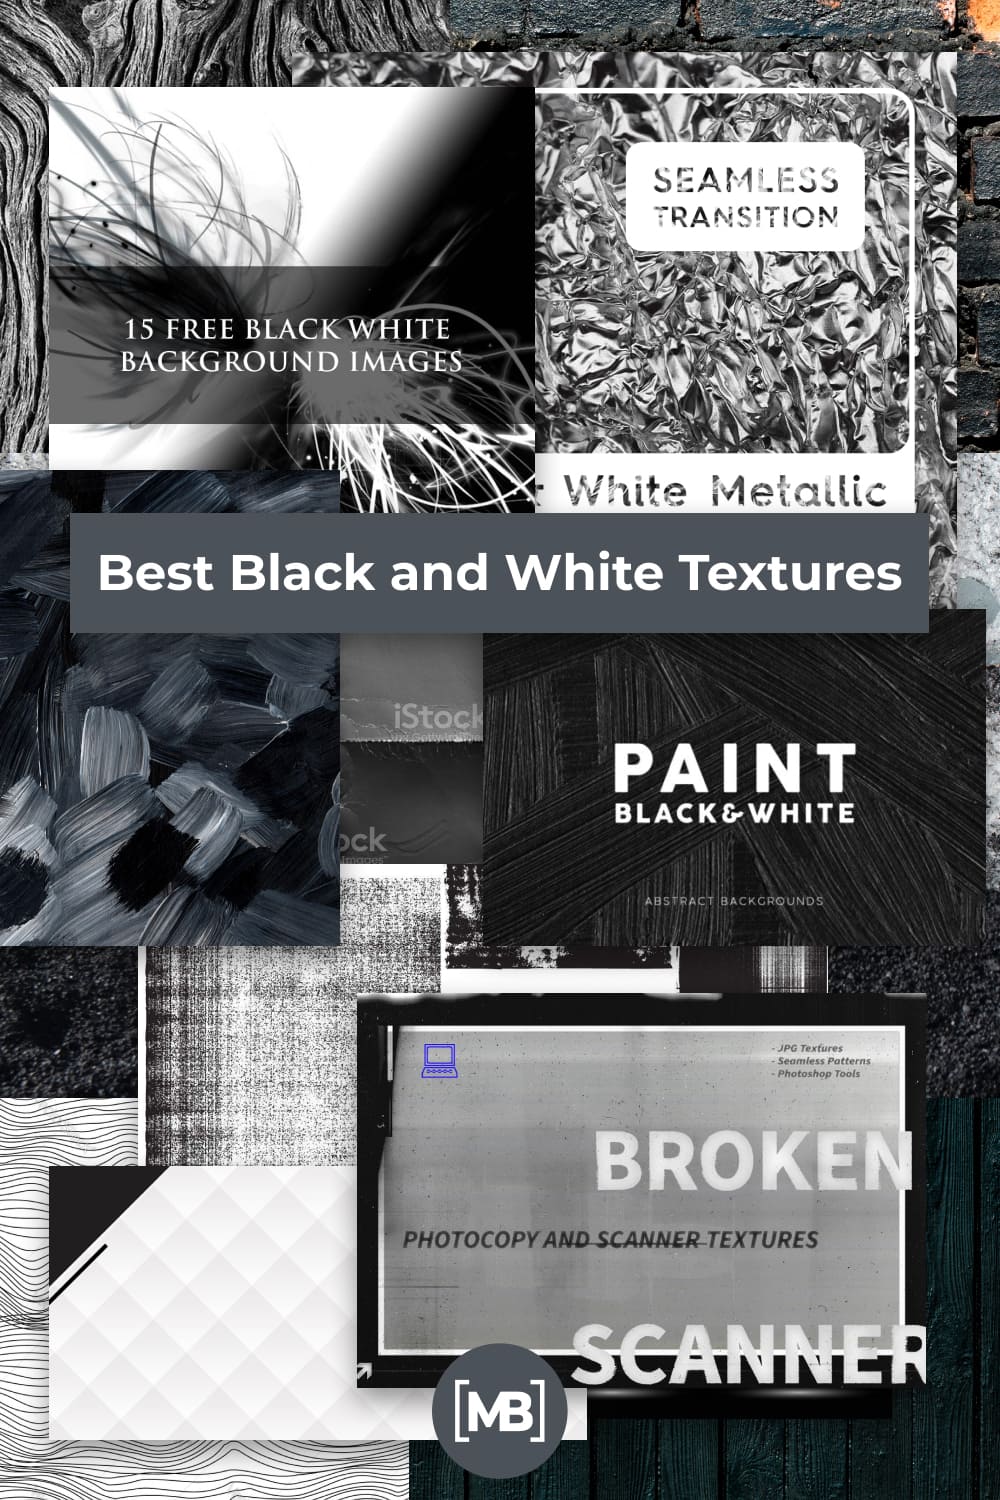 Black and White Textures Pinterest.